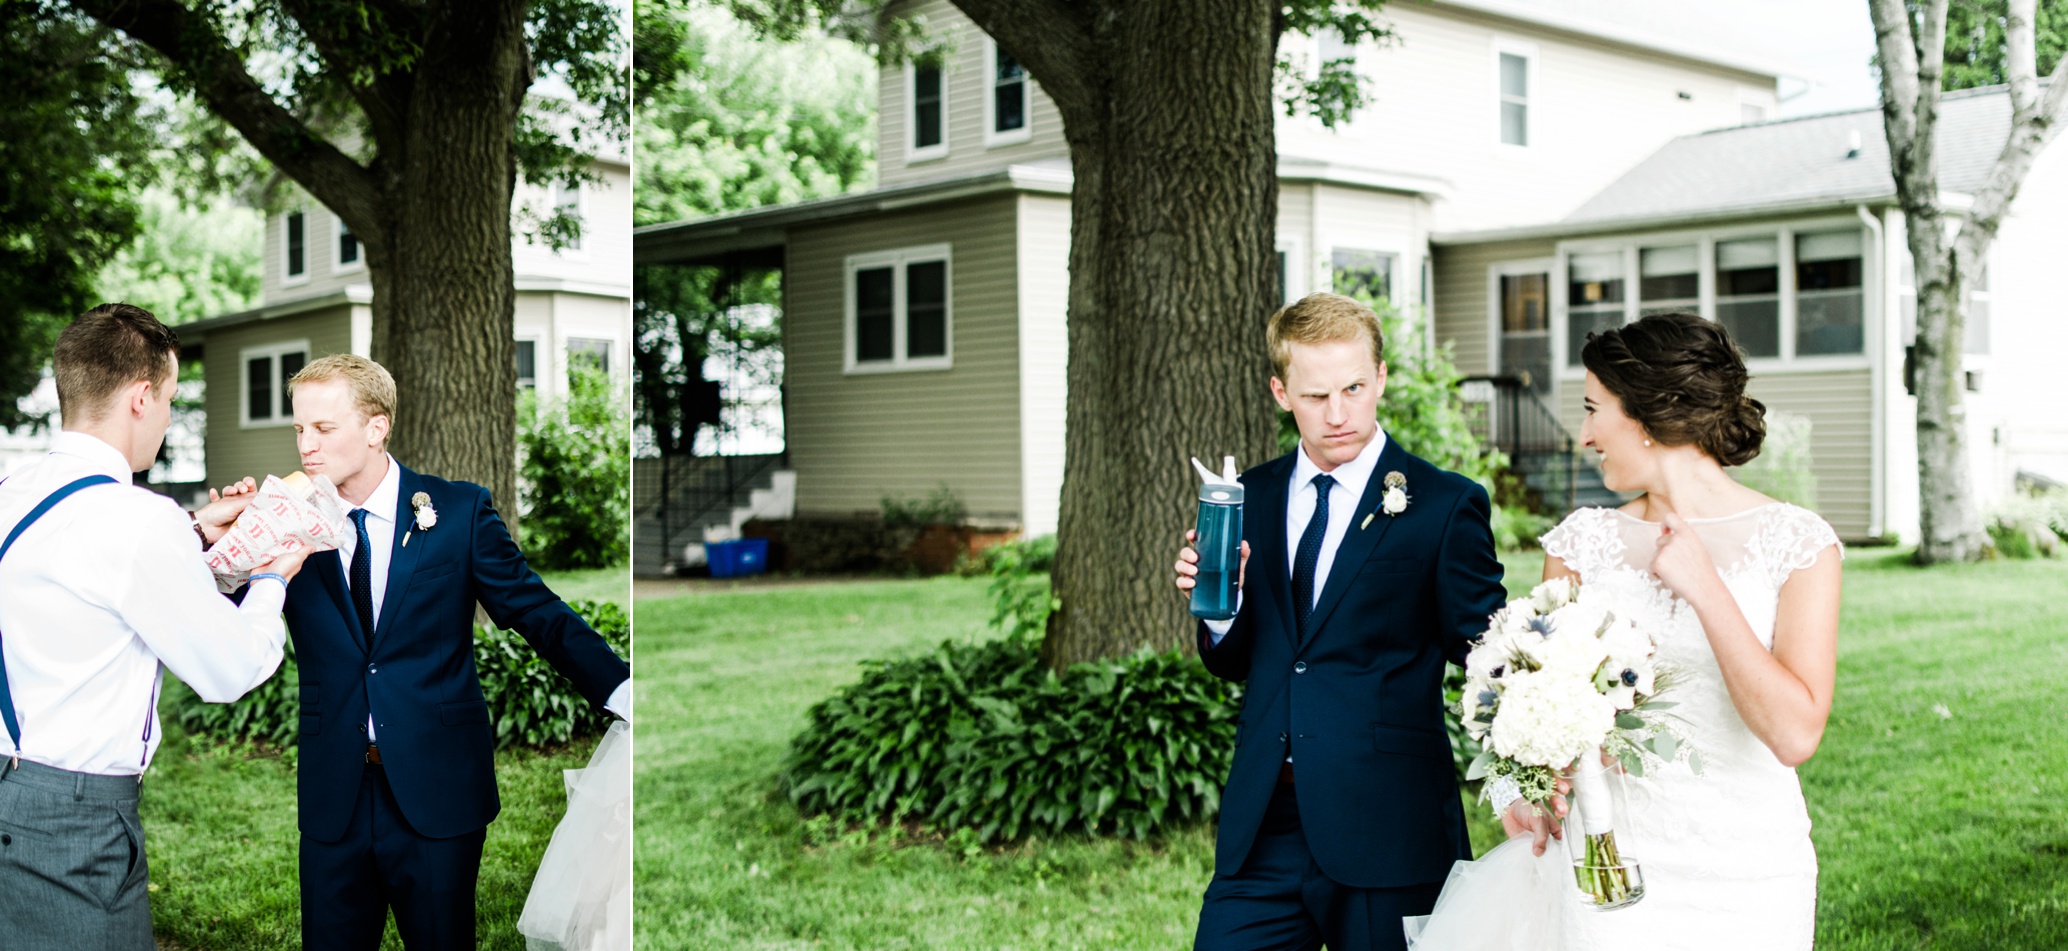 Palmer House and Stable Solon, IA | Ali Leigh Photo Minneapolis Wedding Photographer_0250.jpg